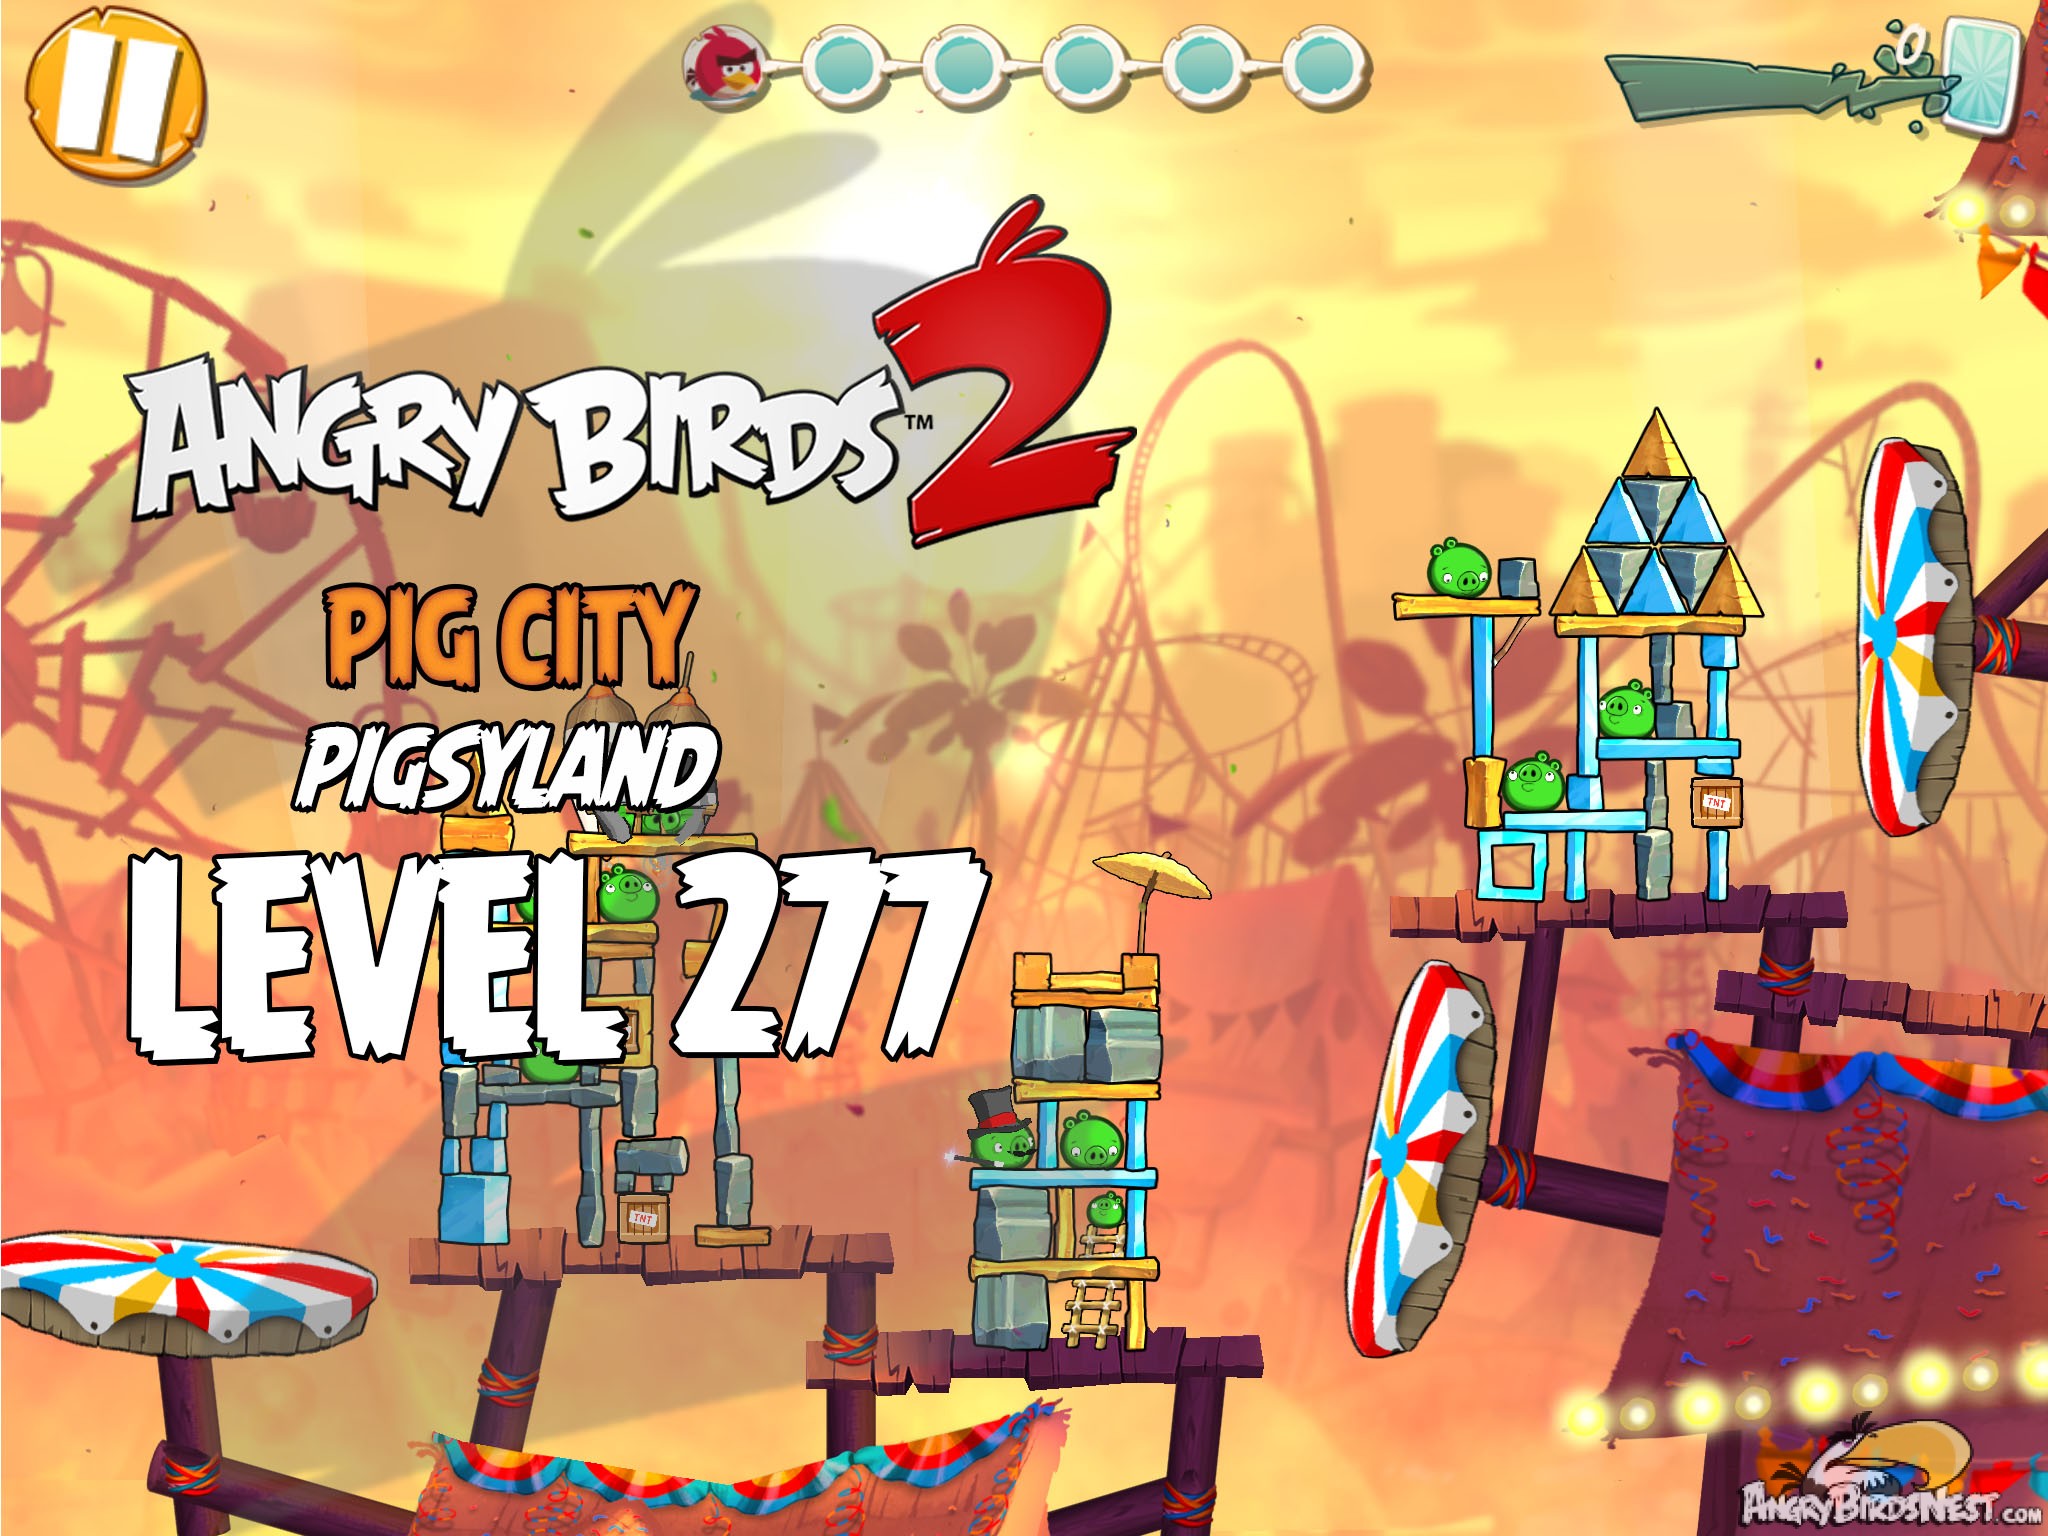 Angry Birds 2 Pig City Pigsyland Level 277